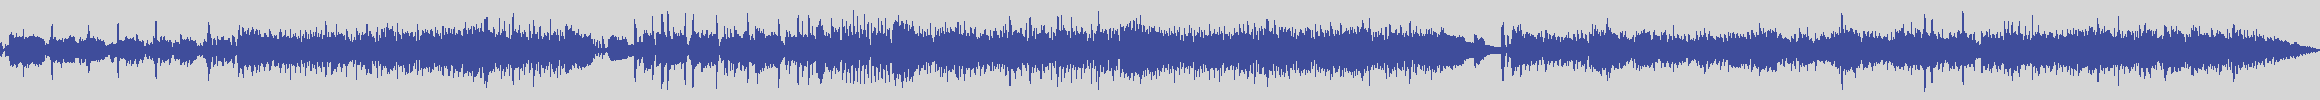 digiphonic_records [DPR013] Little Tony - La Spada Nel Cuore [Original Mix] audio wave form